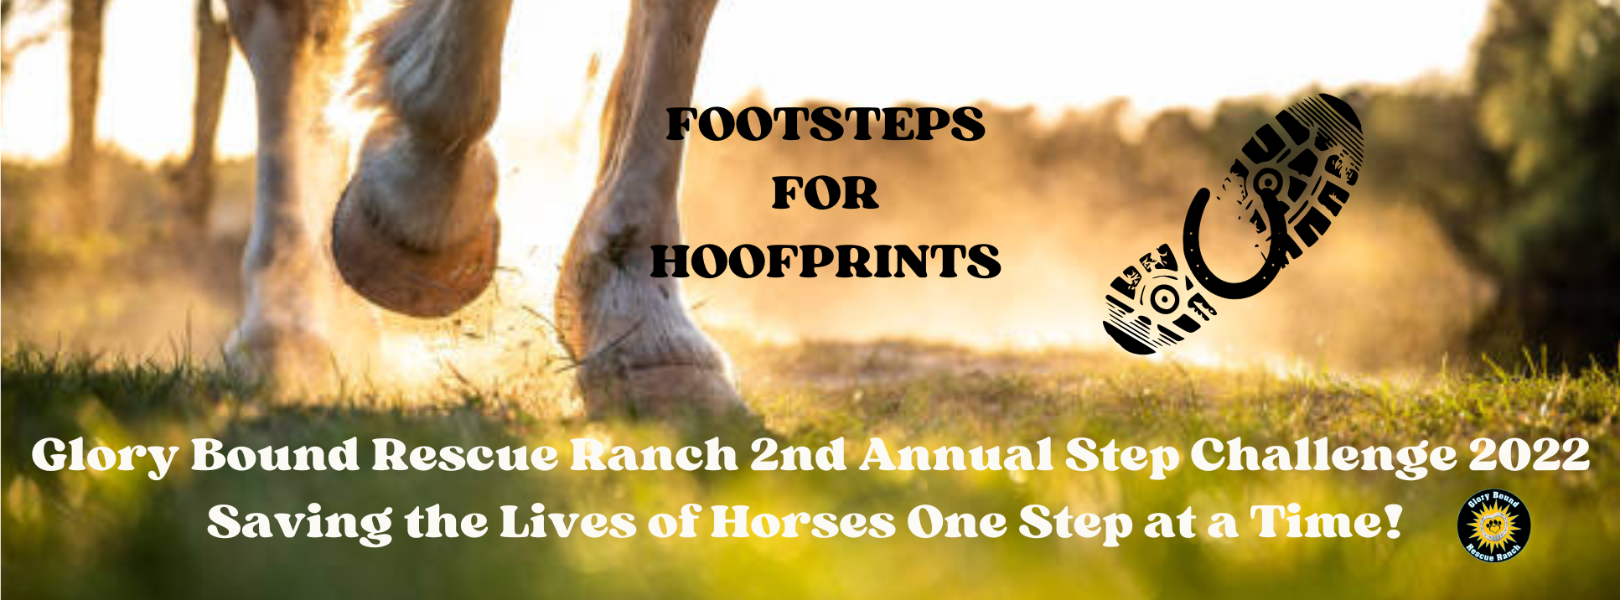 Footsteps for Hoofprints 2022